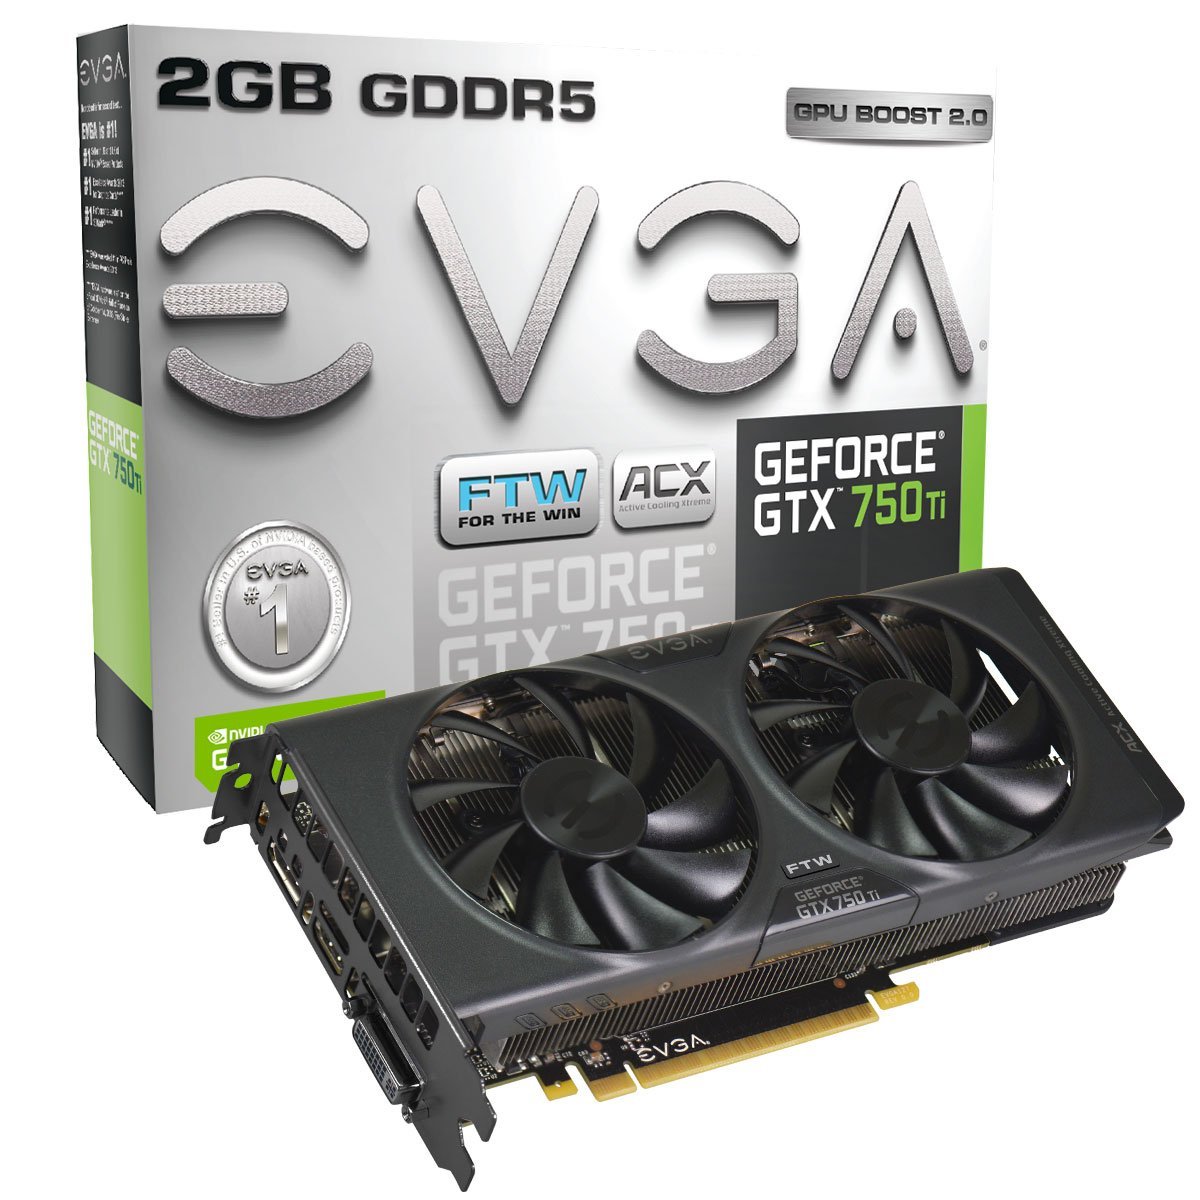 EVGA GeForce GTX 750 Ti FTW DVI-I/HDMI/Display Port GDDR5 Graphics Card